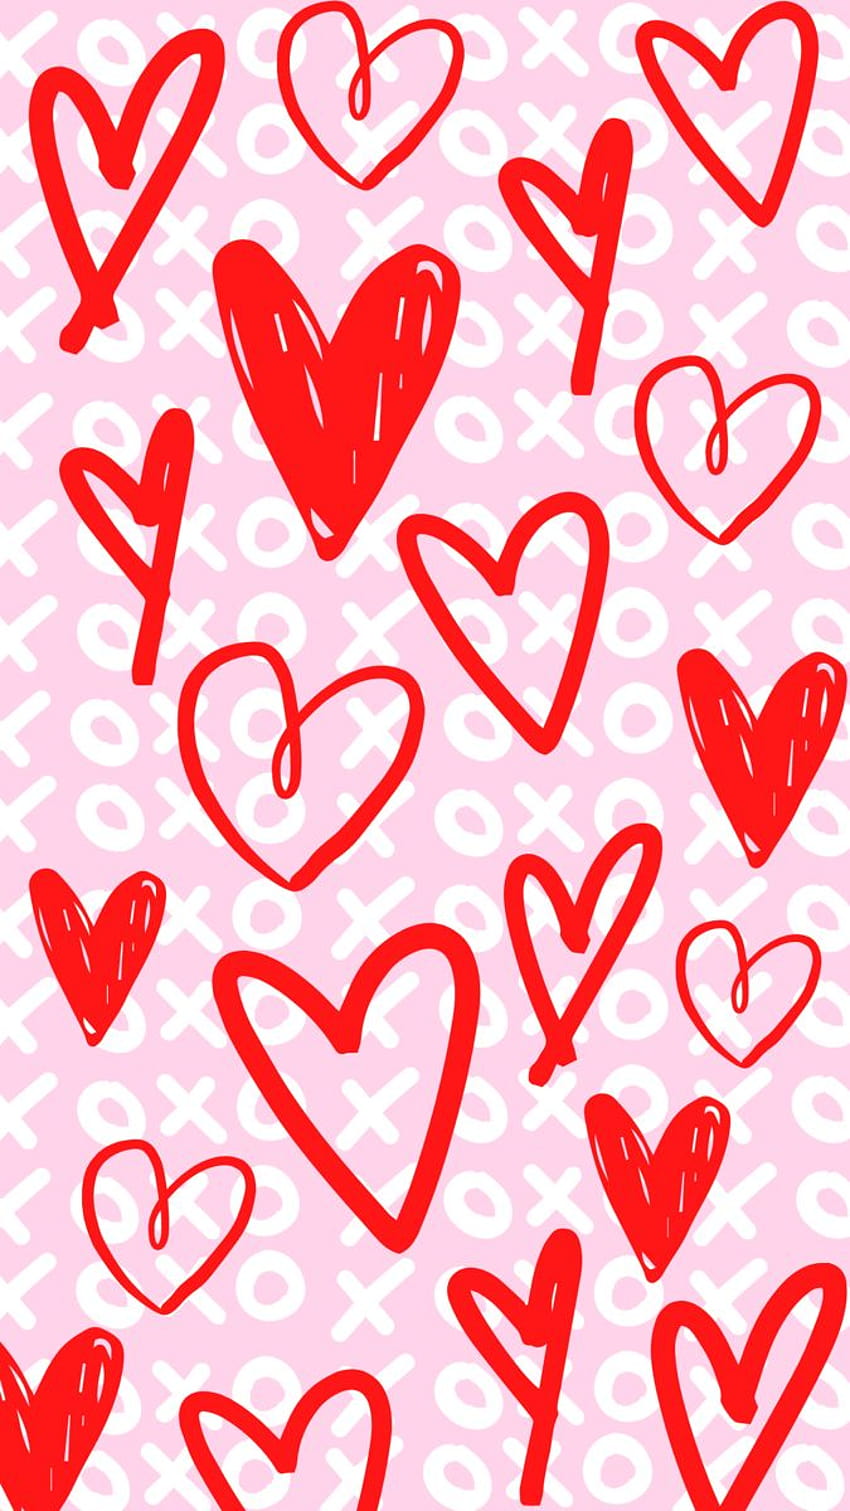 Emmatho di cetakan, preppy valentine wallpaper ponsel HD